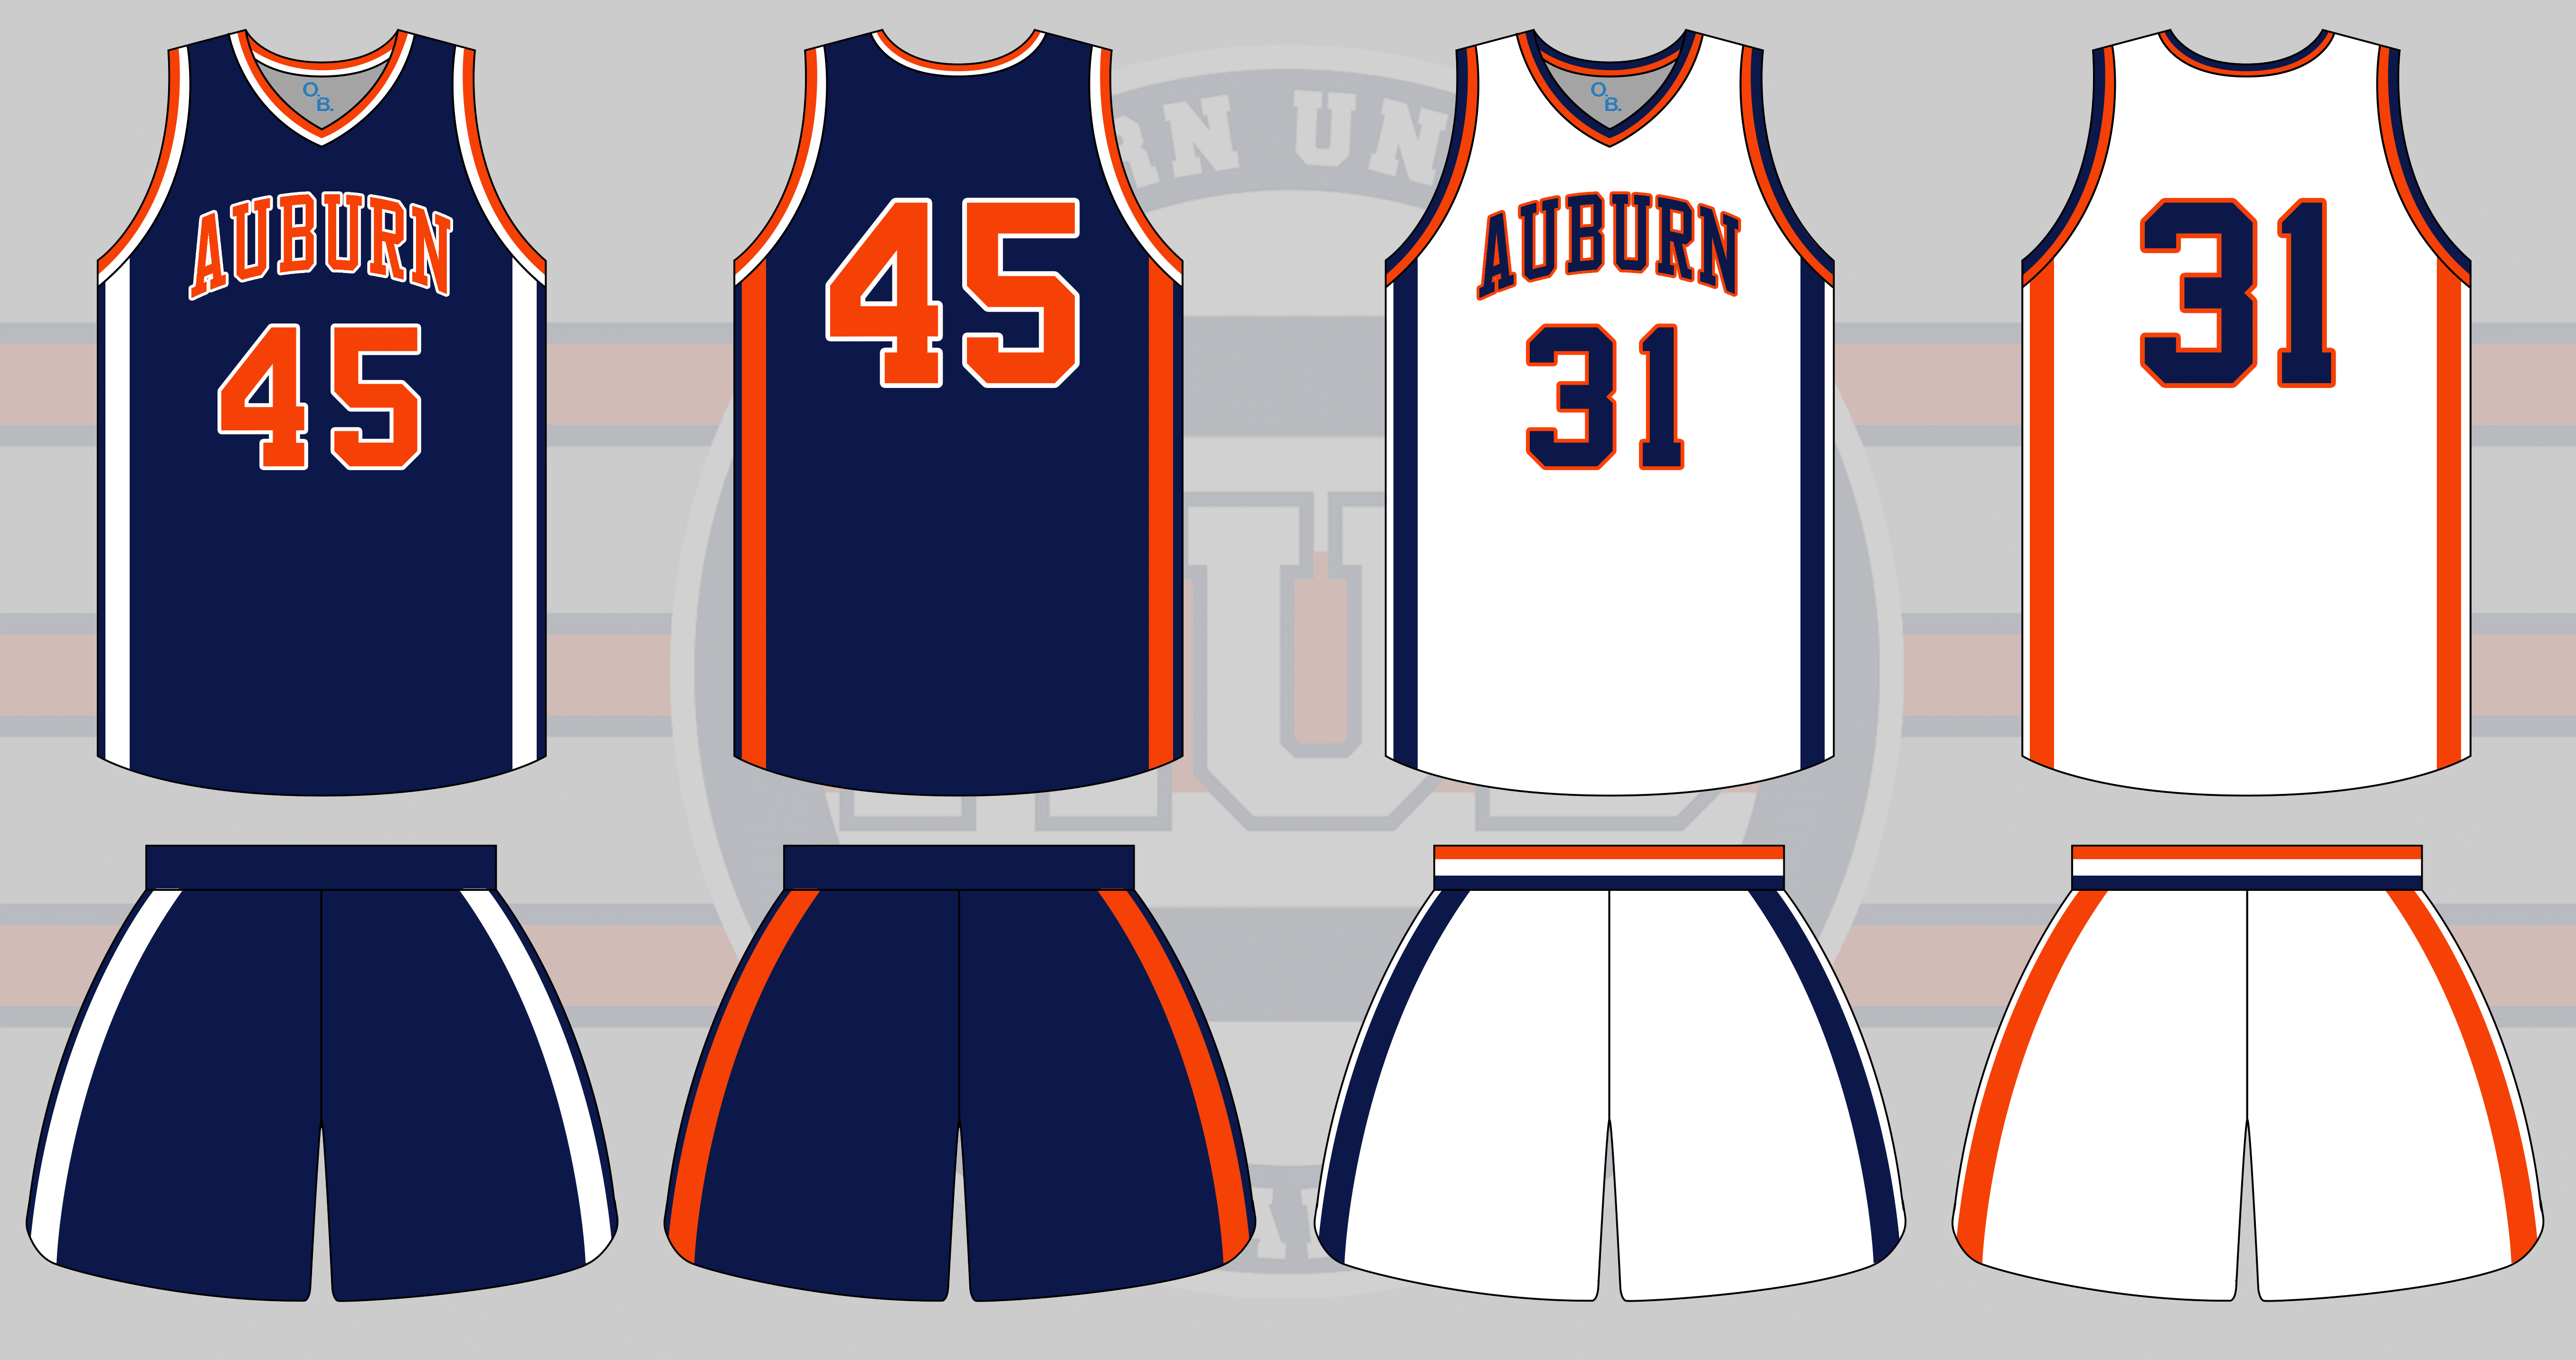 Auburn Men's Basketball Uniforms - Auburn Uniform Database